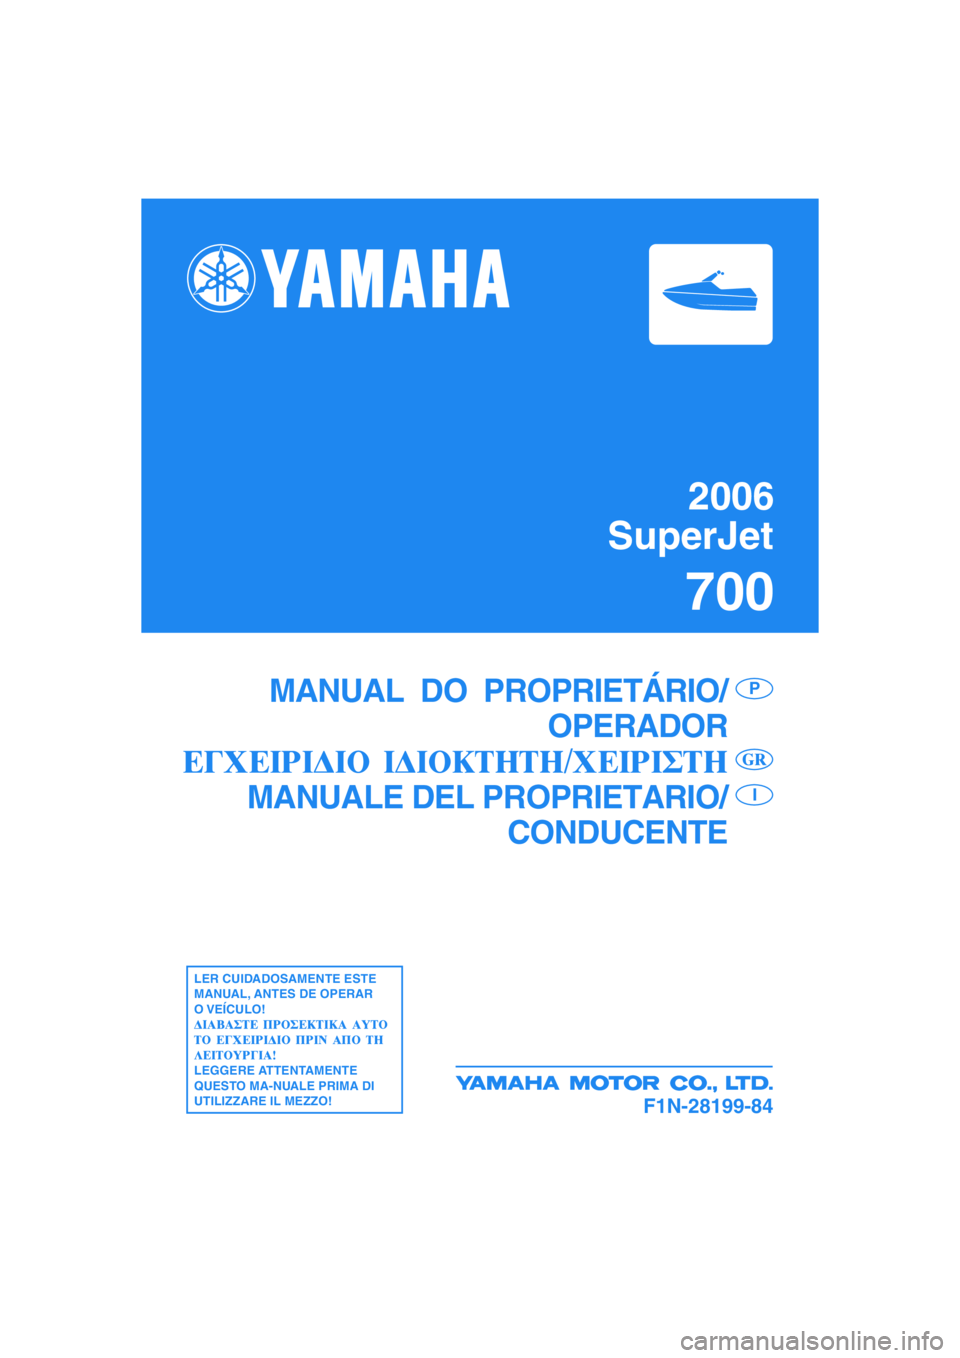 YAMAHA SUPERJET 2006  Manuale duso (in Italian) 2006
SuperJet
700
F1N-28199-84
MANUAL  DO  PROPRIETÁRIO/
OPERADOR
MANUALE DEL PROPRIETARIO/
CONDUCENTEP
I
LER CUIDADOSAMENTE ESTE
MANUAL, ANTES DE OPERAR
O VEÍCULO!
LEGGERE ATTENTAMENTE
QUESTO MA-NU